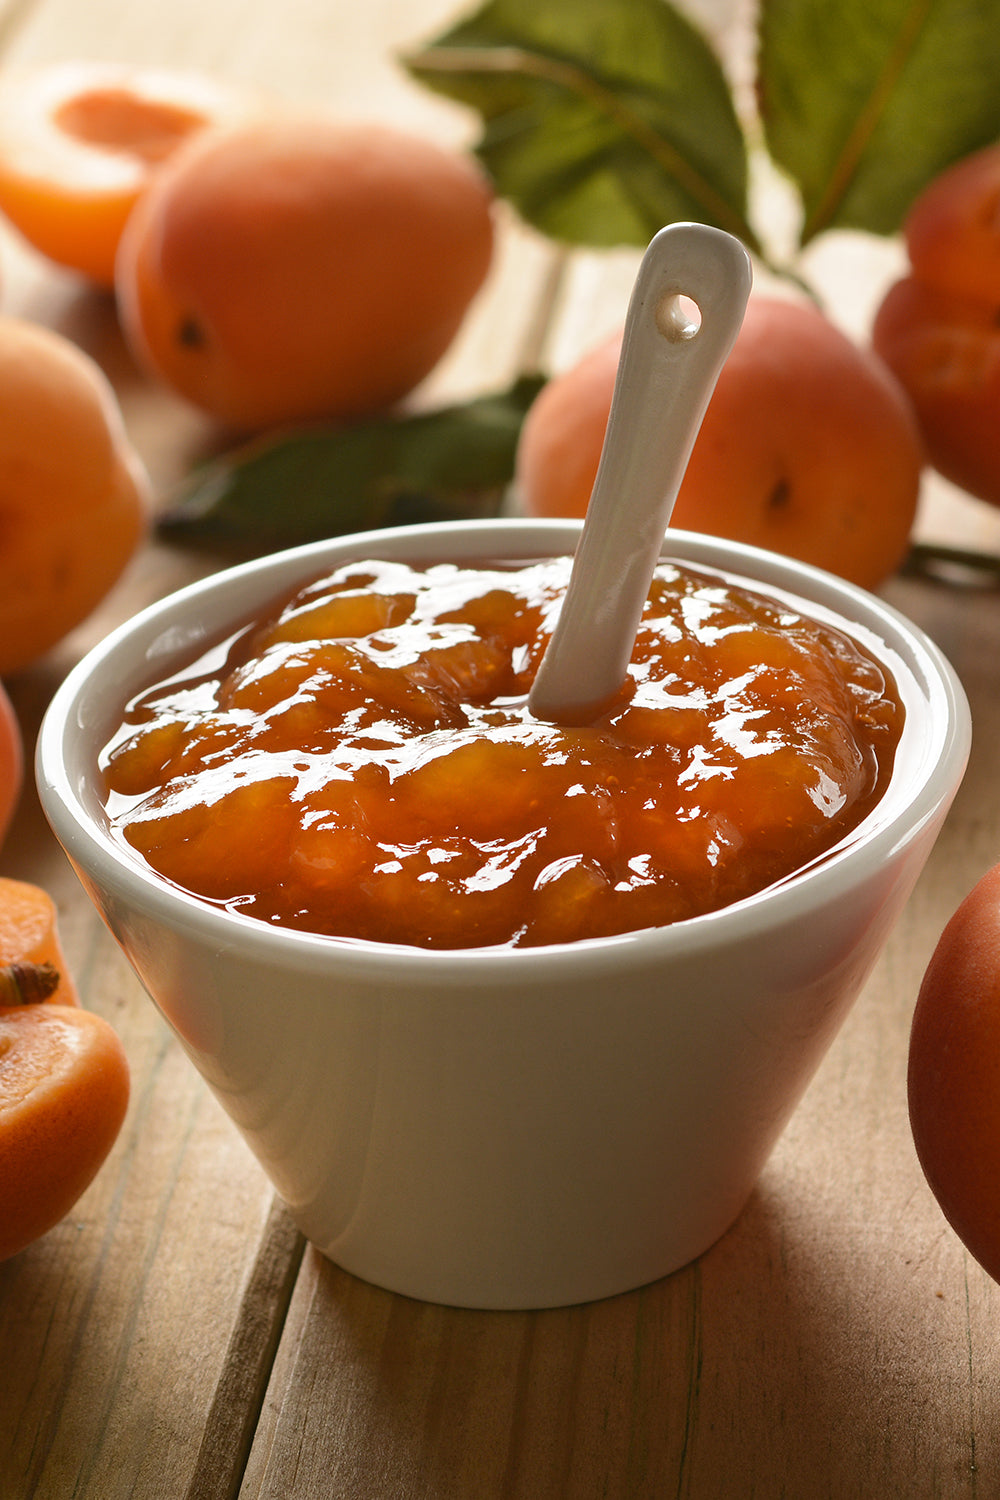 Slicing Fruit for Marmalade